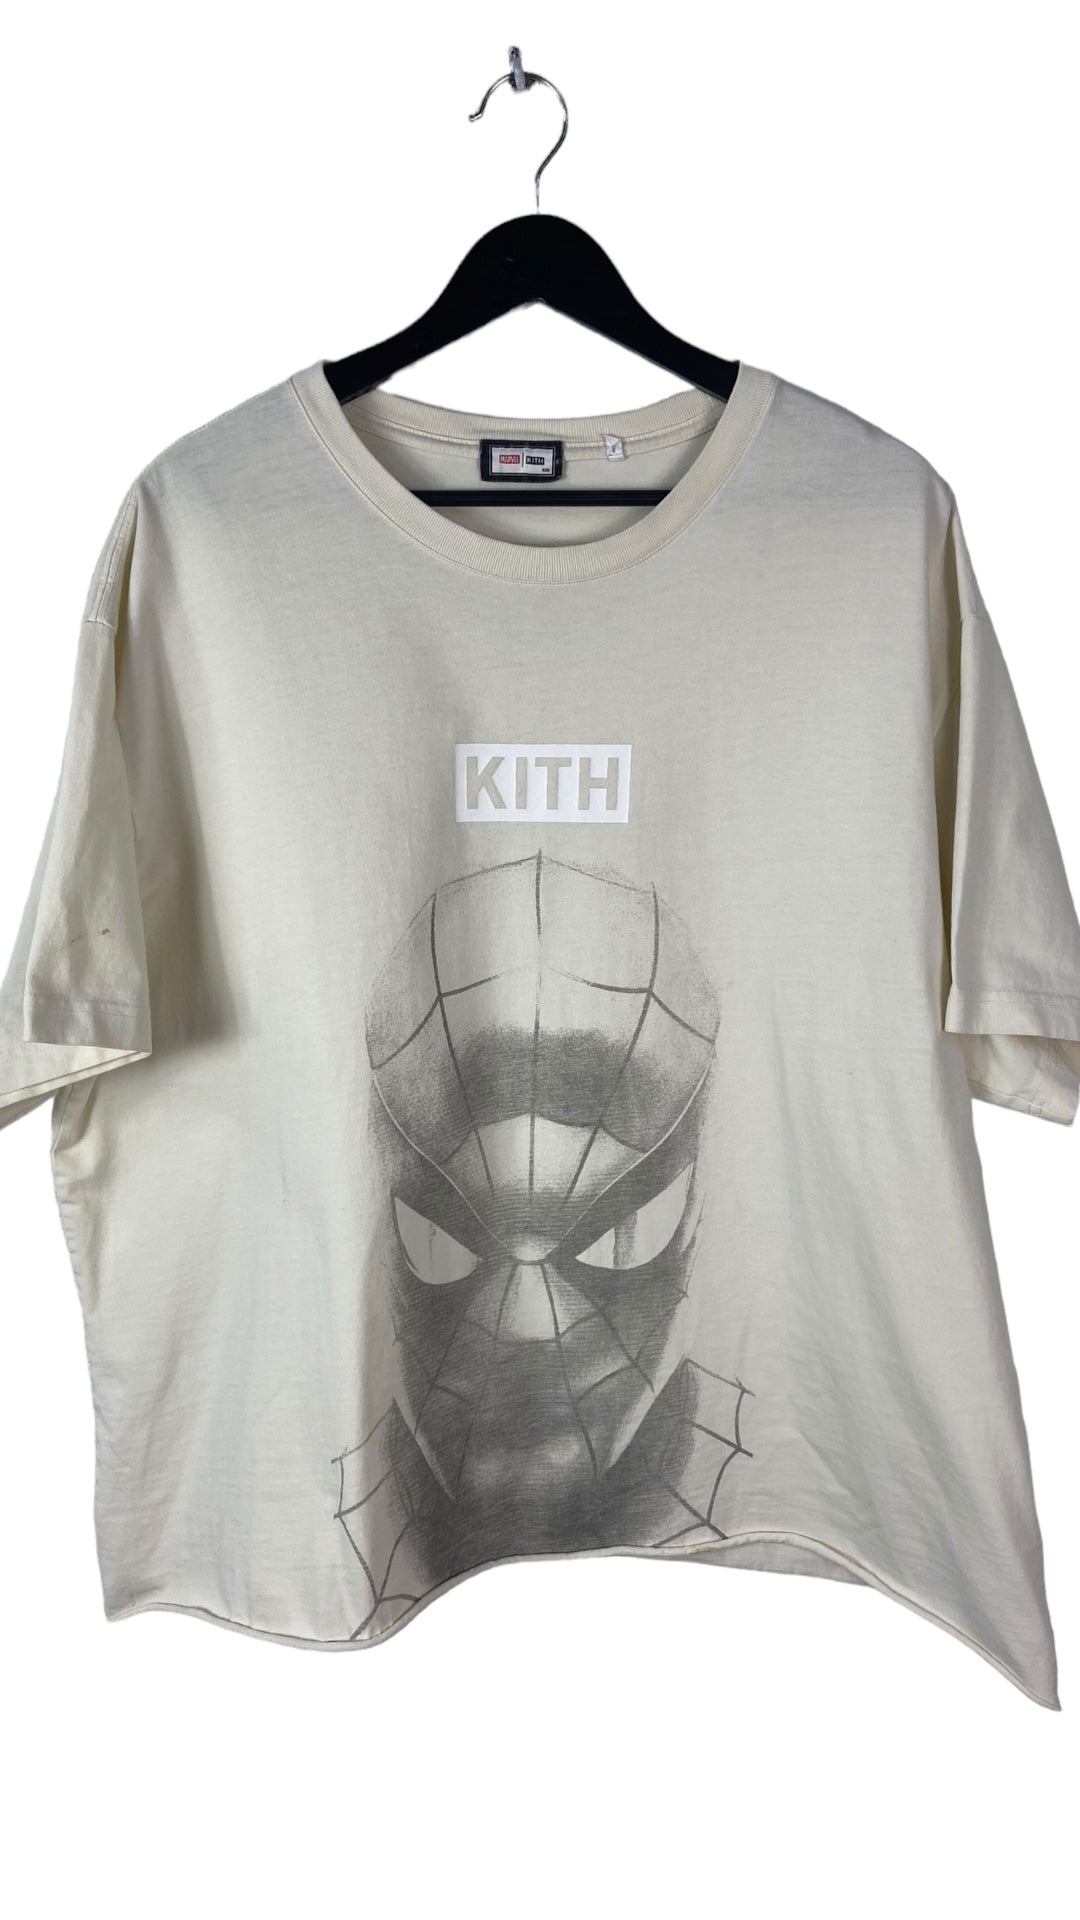 Preowned Kith Marvel Spider-Man Vigilante Cropped Tee Sz M/L